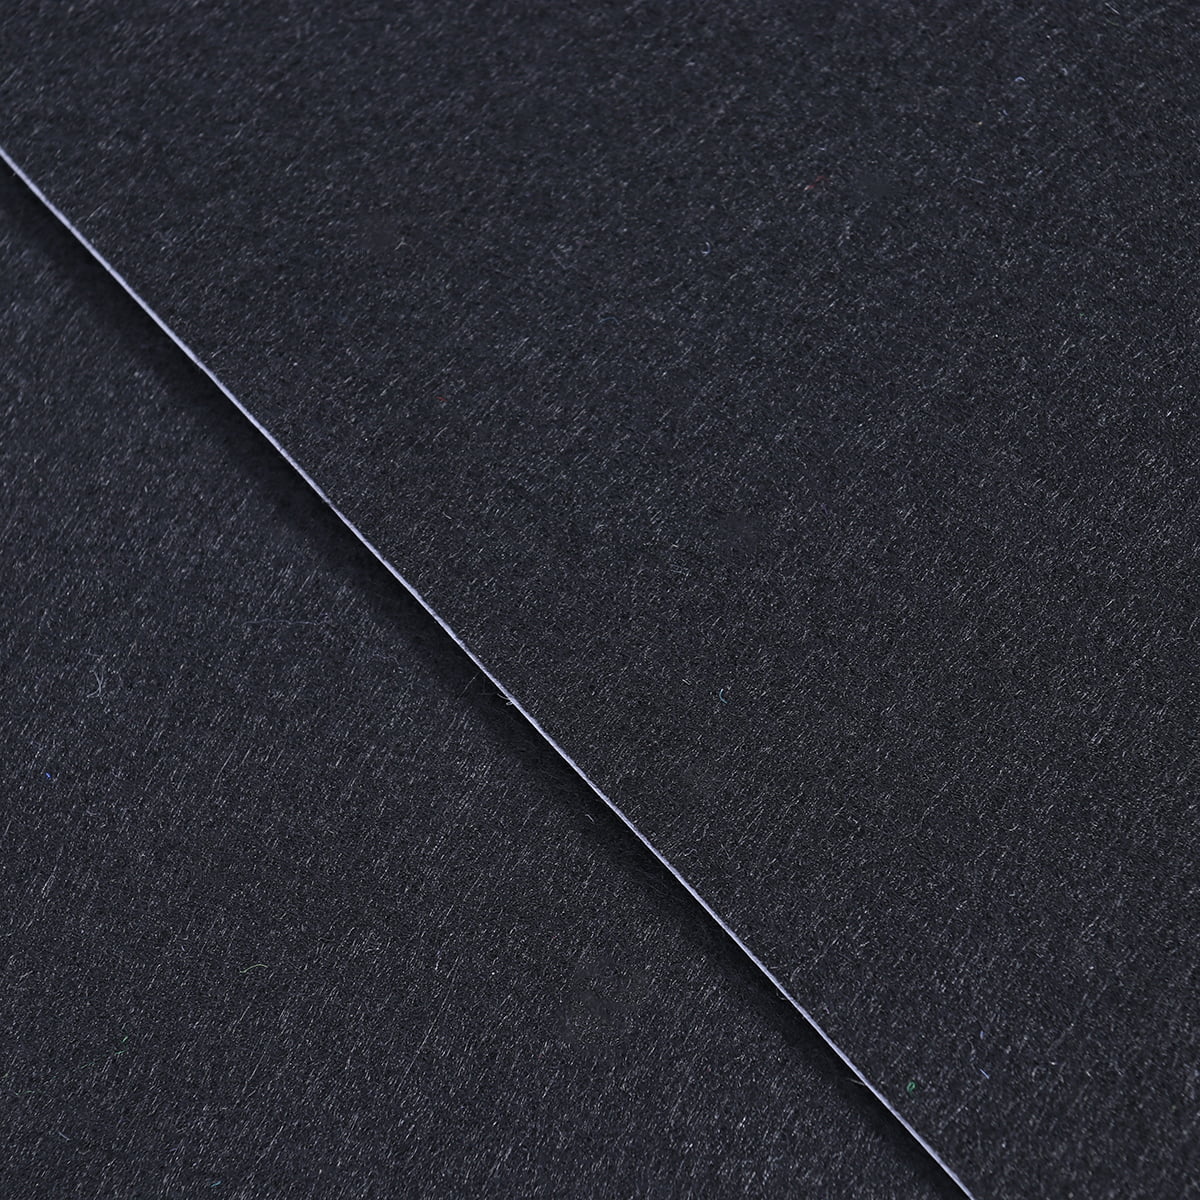 10 Sheets Blank Kraft Paper Self-adhesive Felt Sheets Multi-purpose for and  Craft Making (Black)